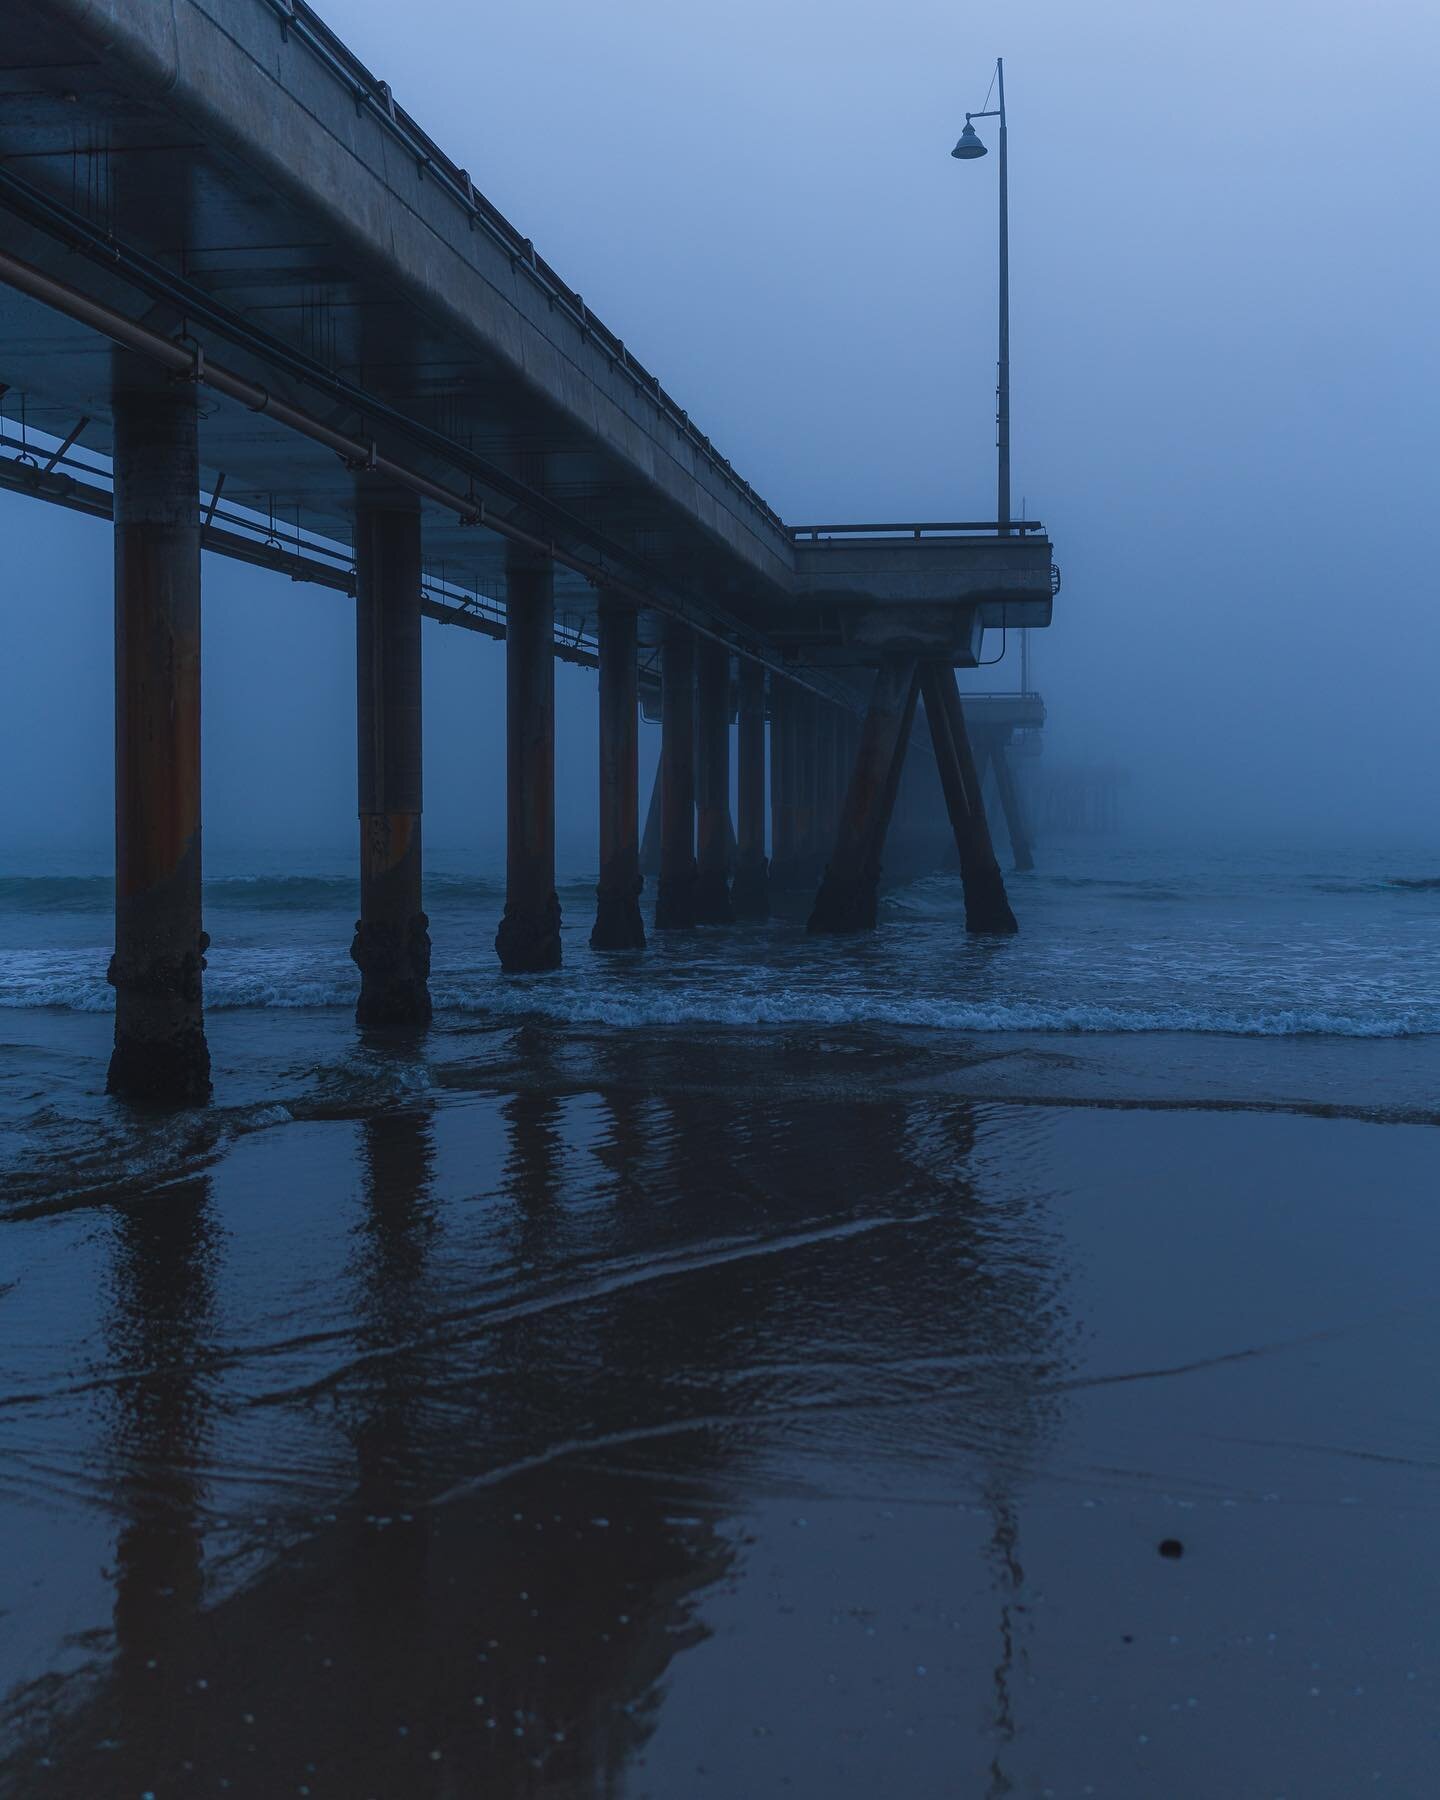 Moody and cold at Venice Beach.

Camera: Sony A7Riii @sonyalpha
Lens: Sigma 35mm f/1.4 DG DN Art

#shotsdelight #sonyimages #beachphotography 
#creativeoptic #eclectic_shotz #visualambassadors #losangelesphotography #moodygrams #stayandwander #agameo